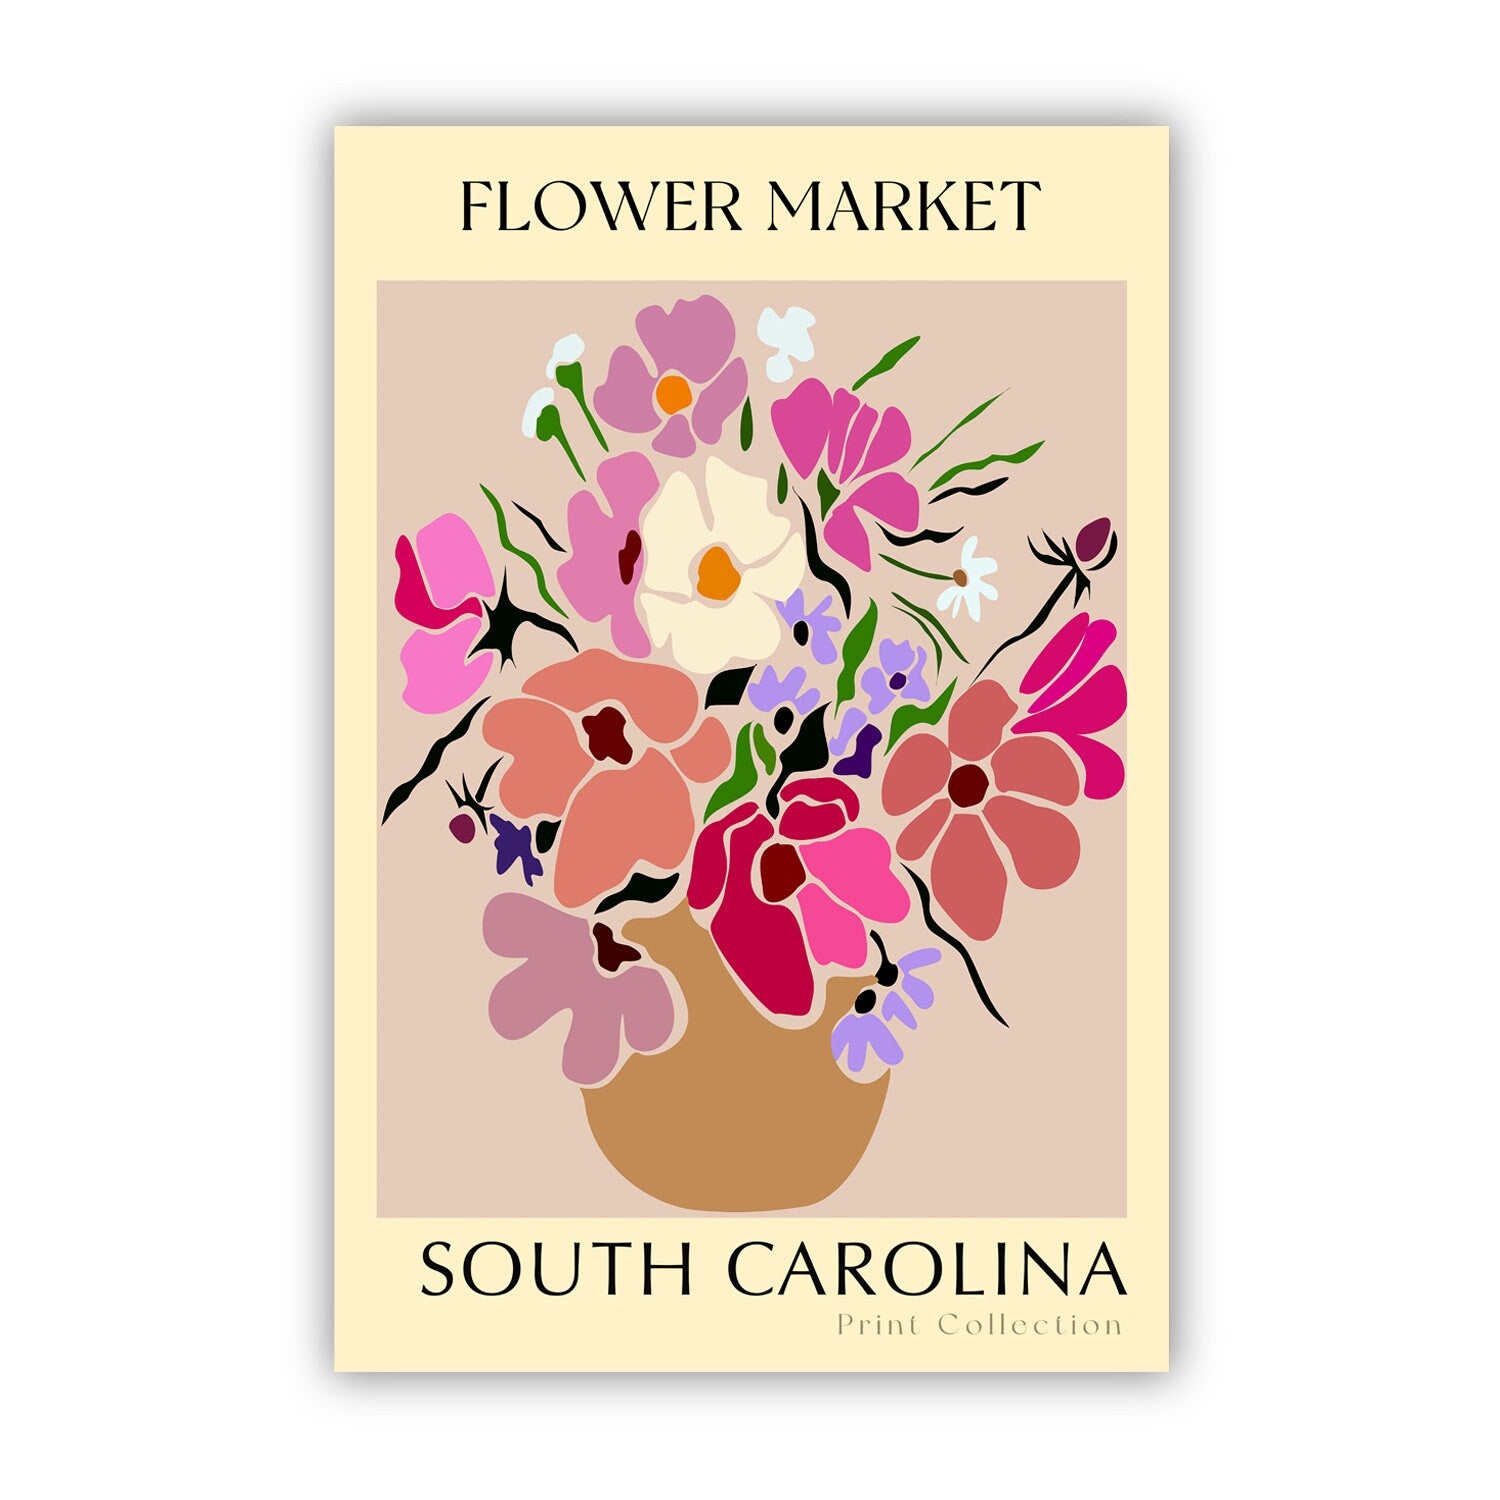 South Carolina State flower print, States poster, South Carolina flower market poster, Botanical poster, Nature floral poster artwork